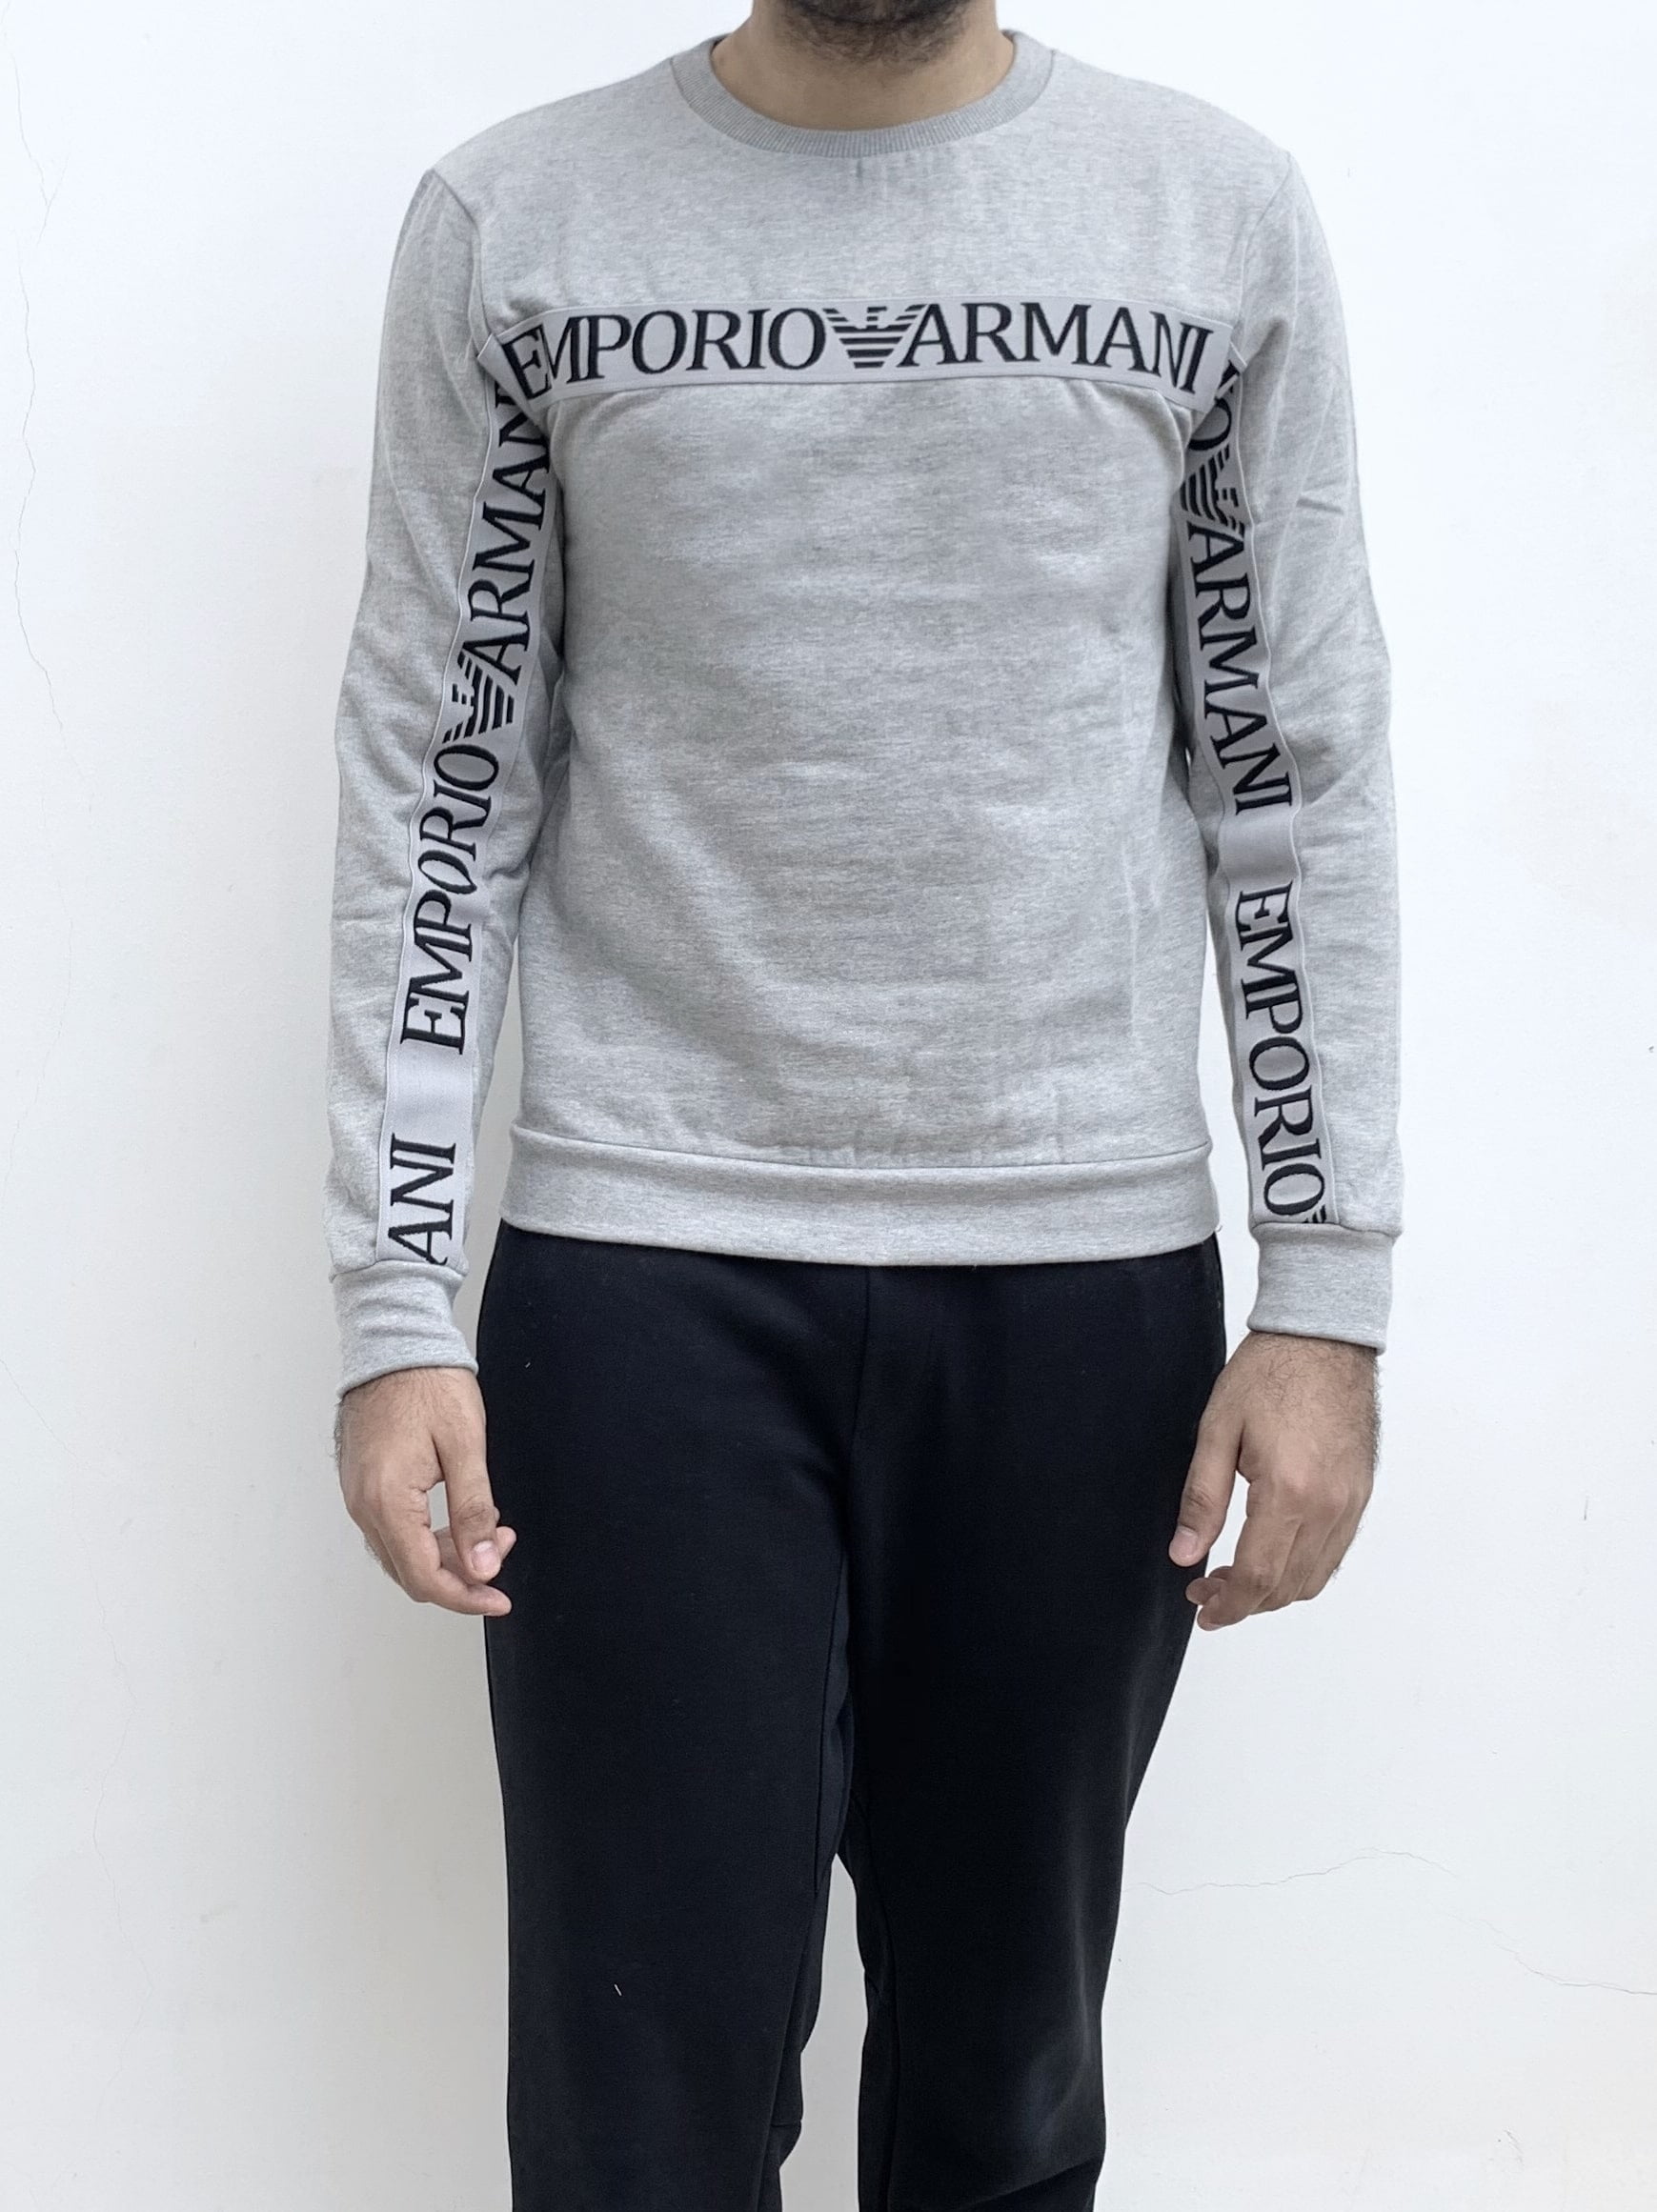 IMG 9473 min - Emporio Armani Premium Sweatshirt